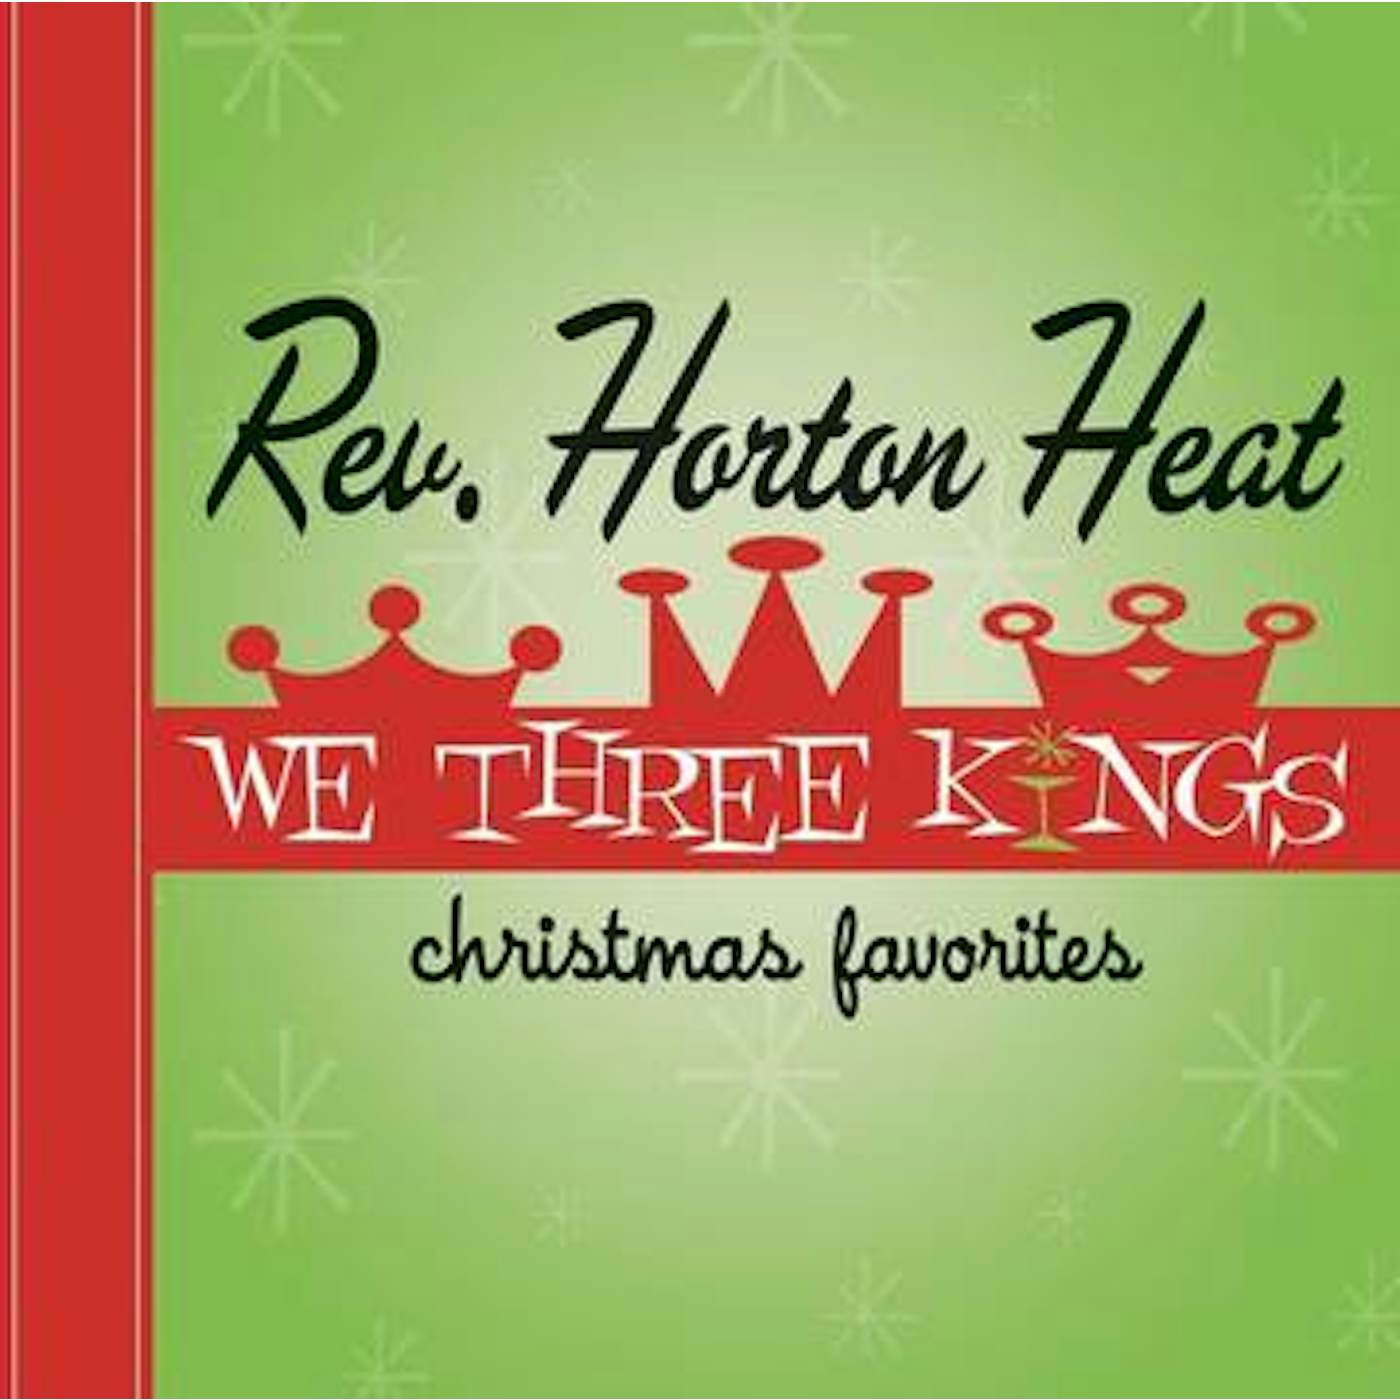 The Reverend Horton Heat We Three Kings vinyl record